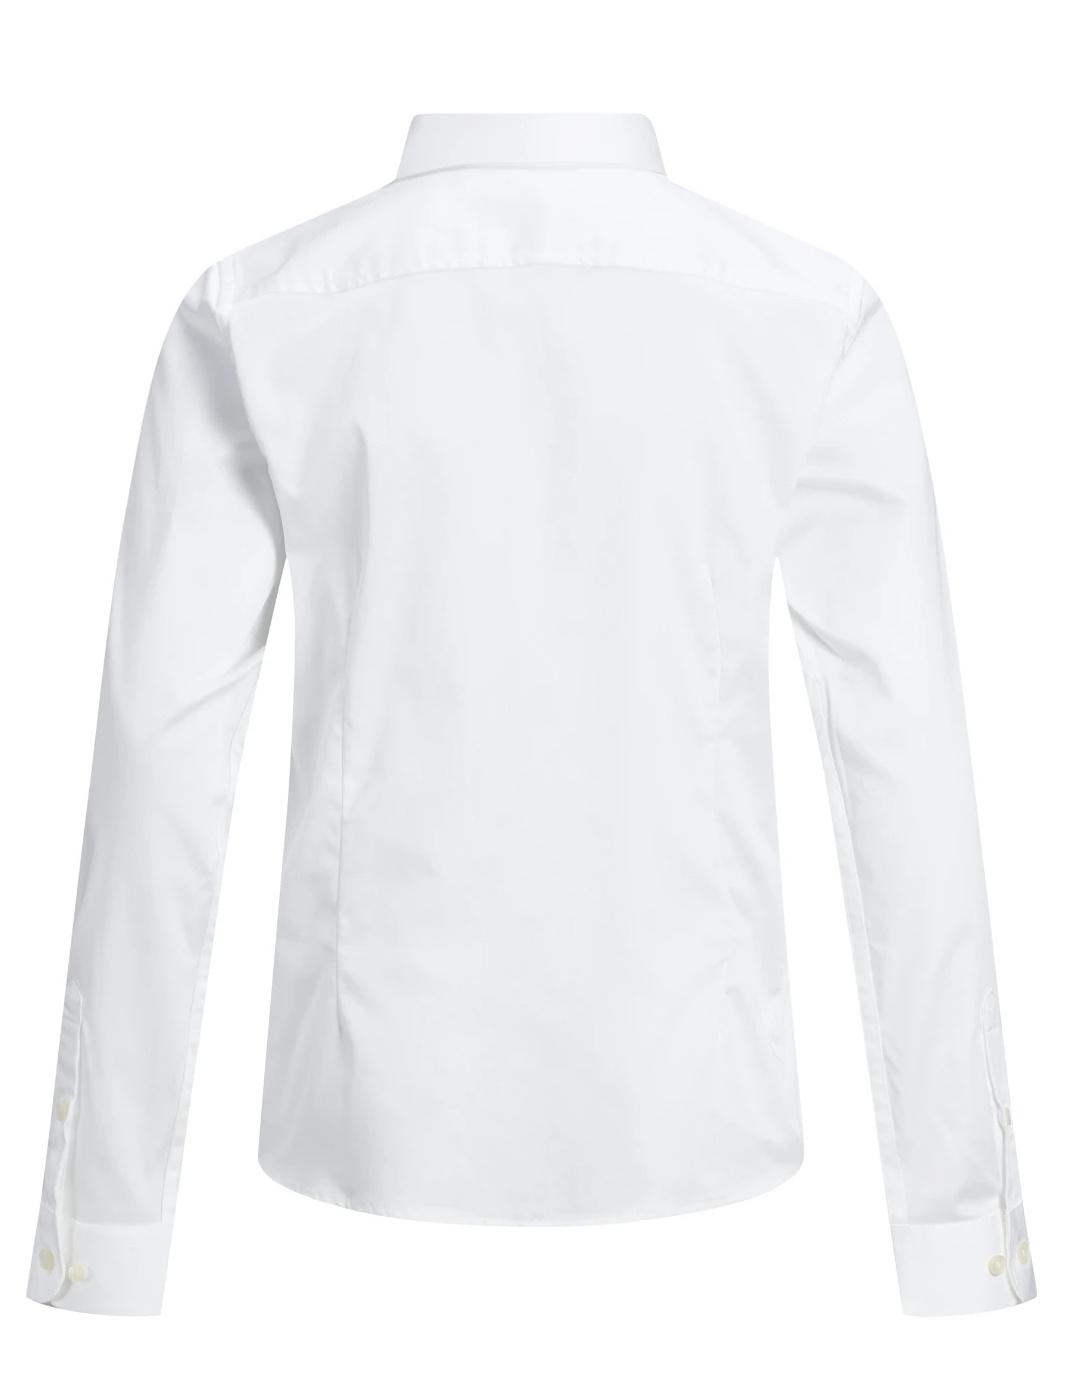 Camisa Jack&Jones Junior Parma blanca para niño